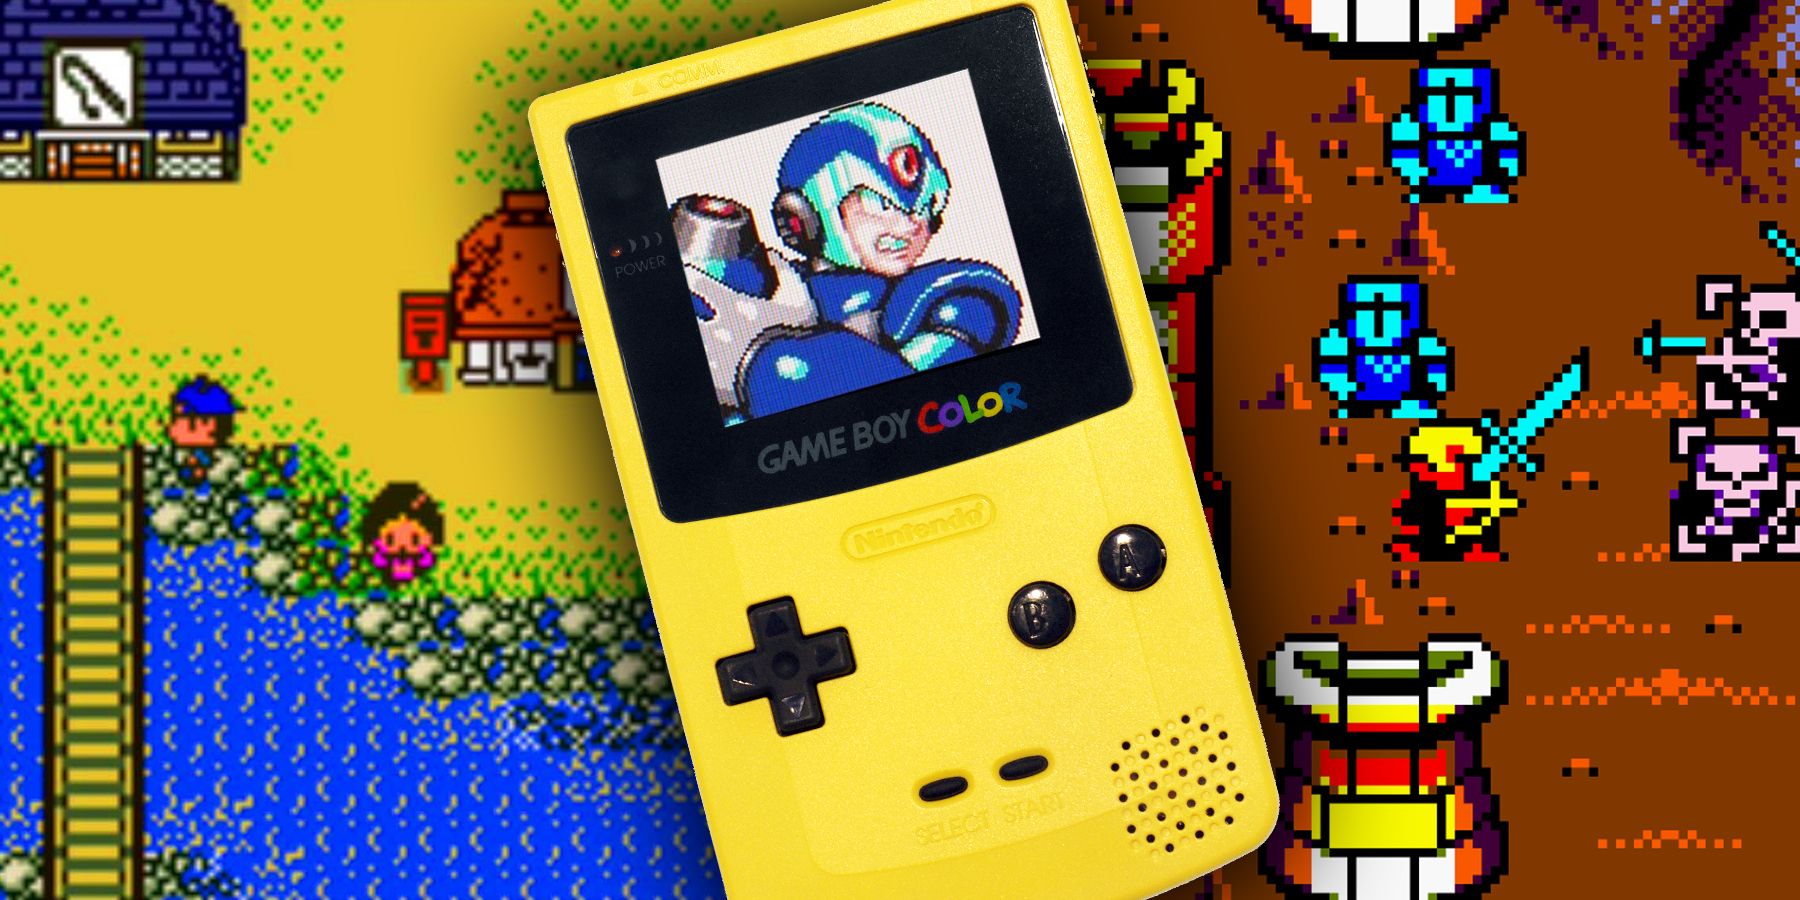 Nintendo Game Boy Color (Yellow) Refurbished Smart Generation